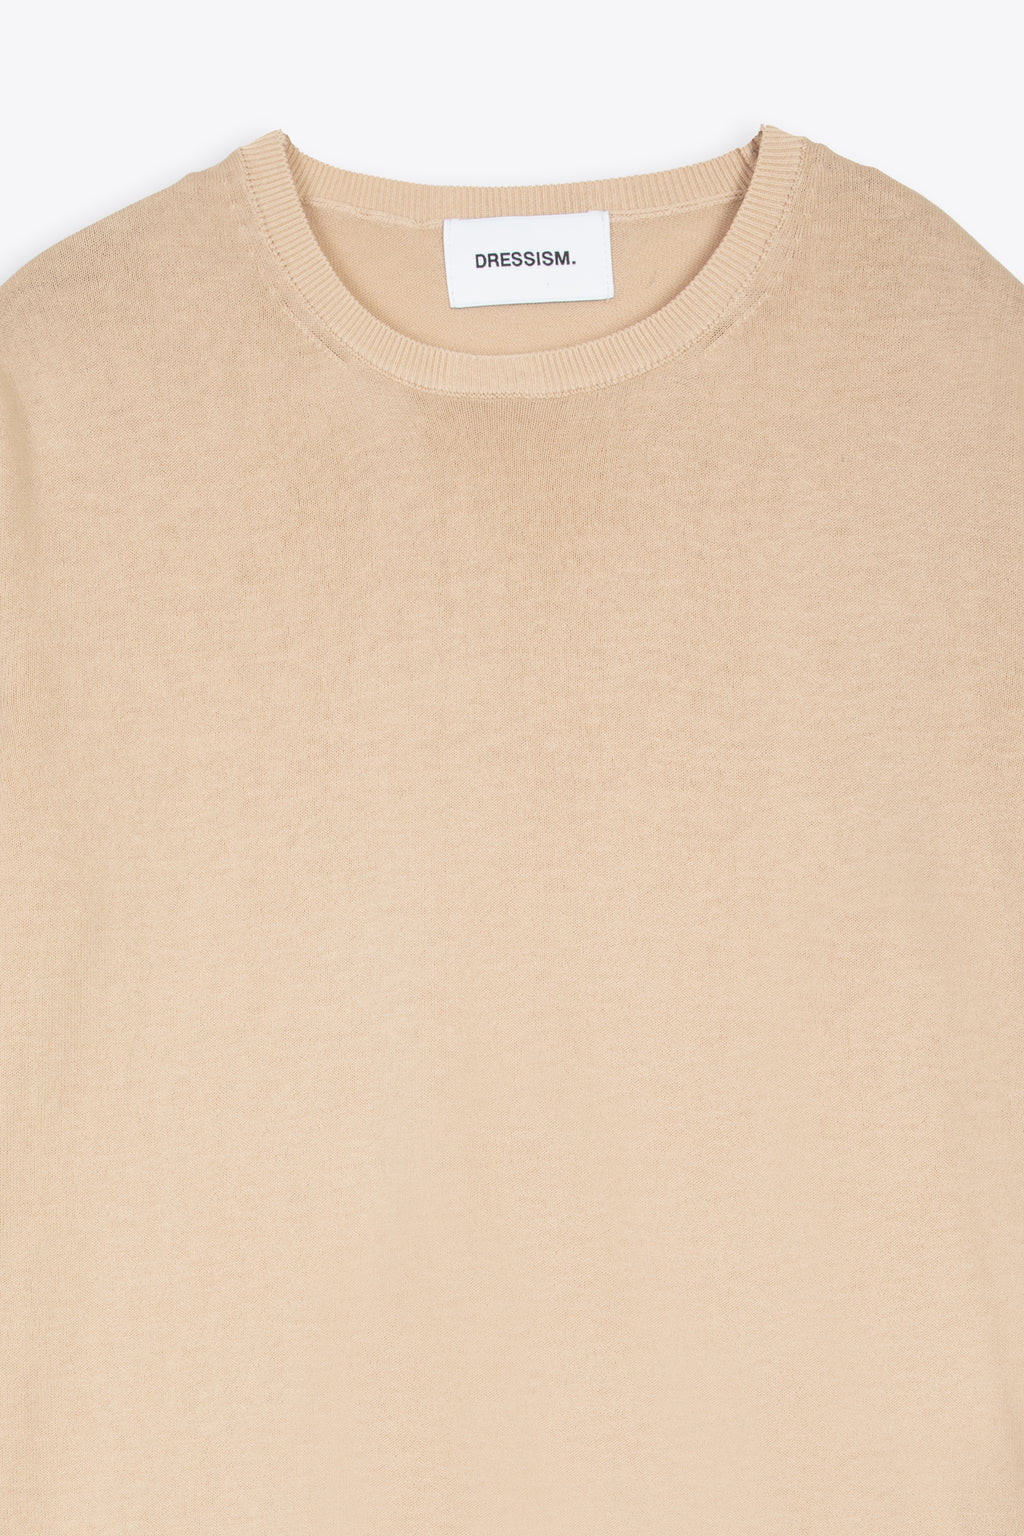 alt-image__T-shirt-in-filo-di-cotone-beige